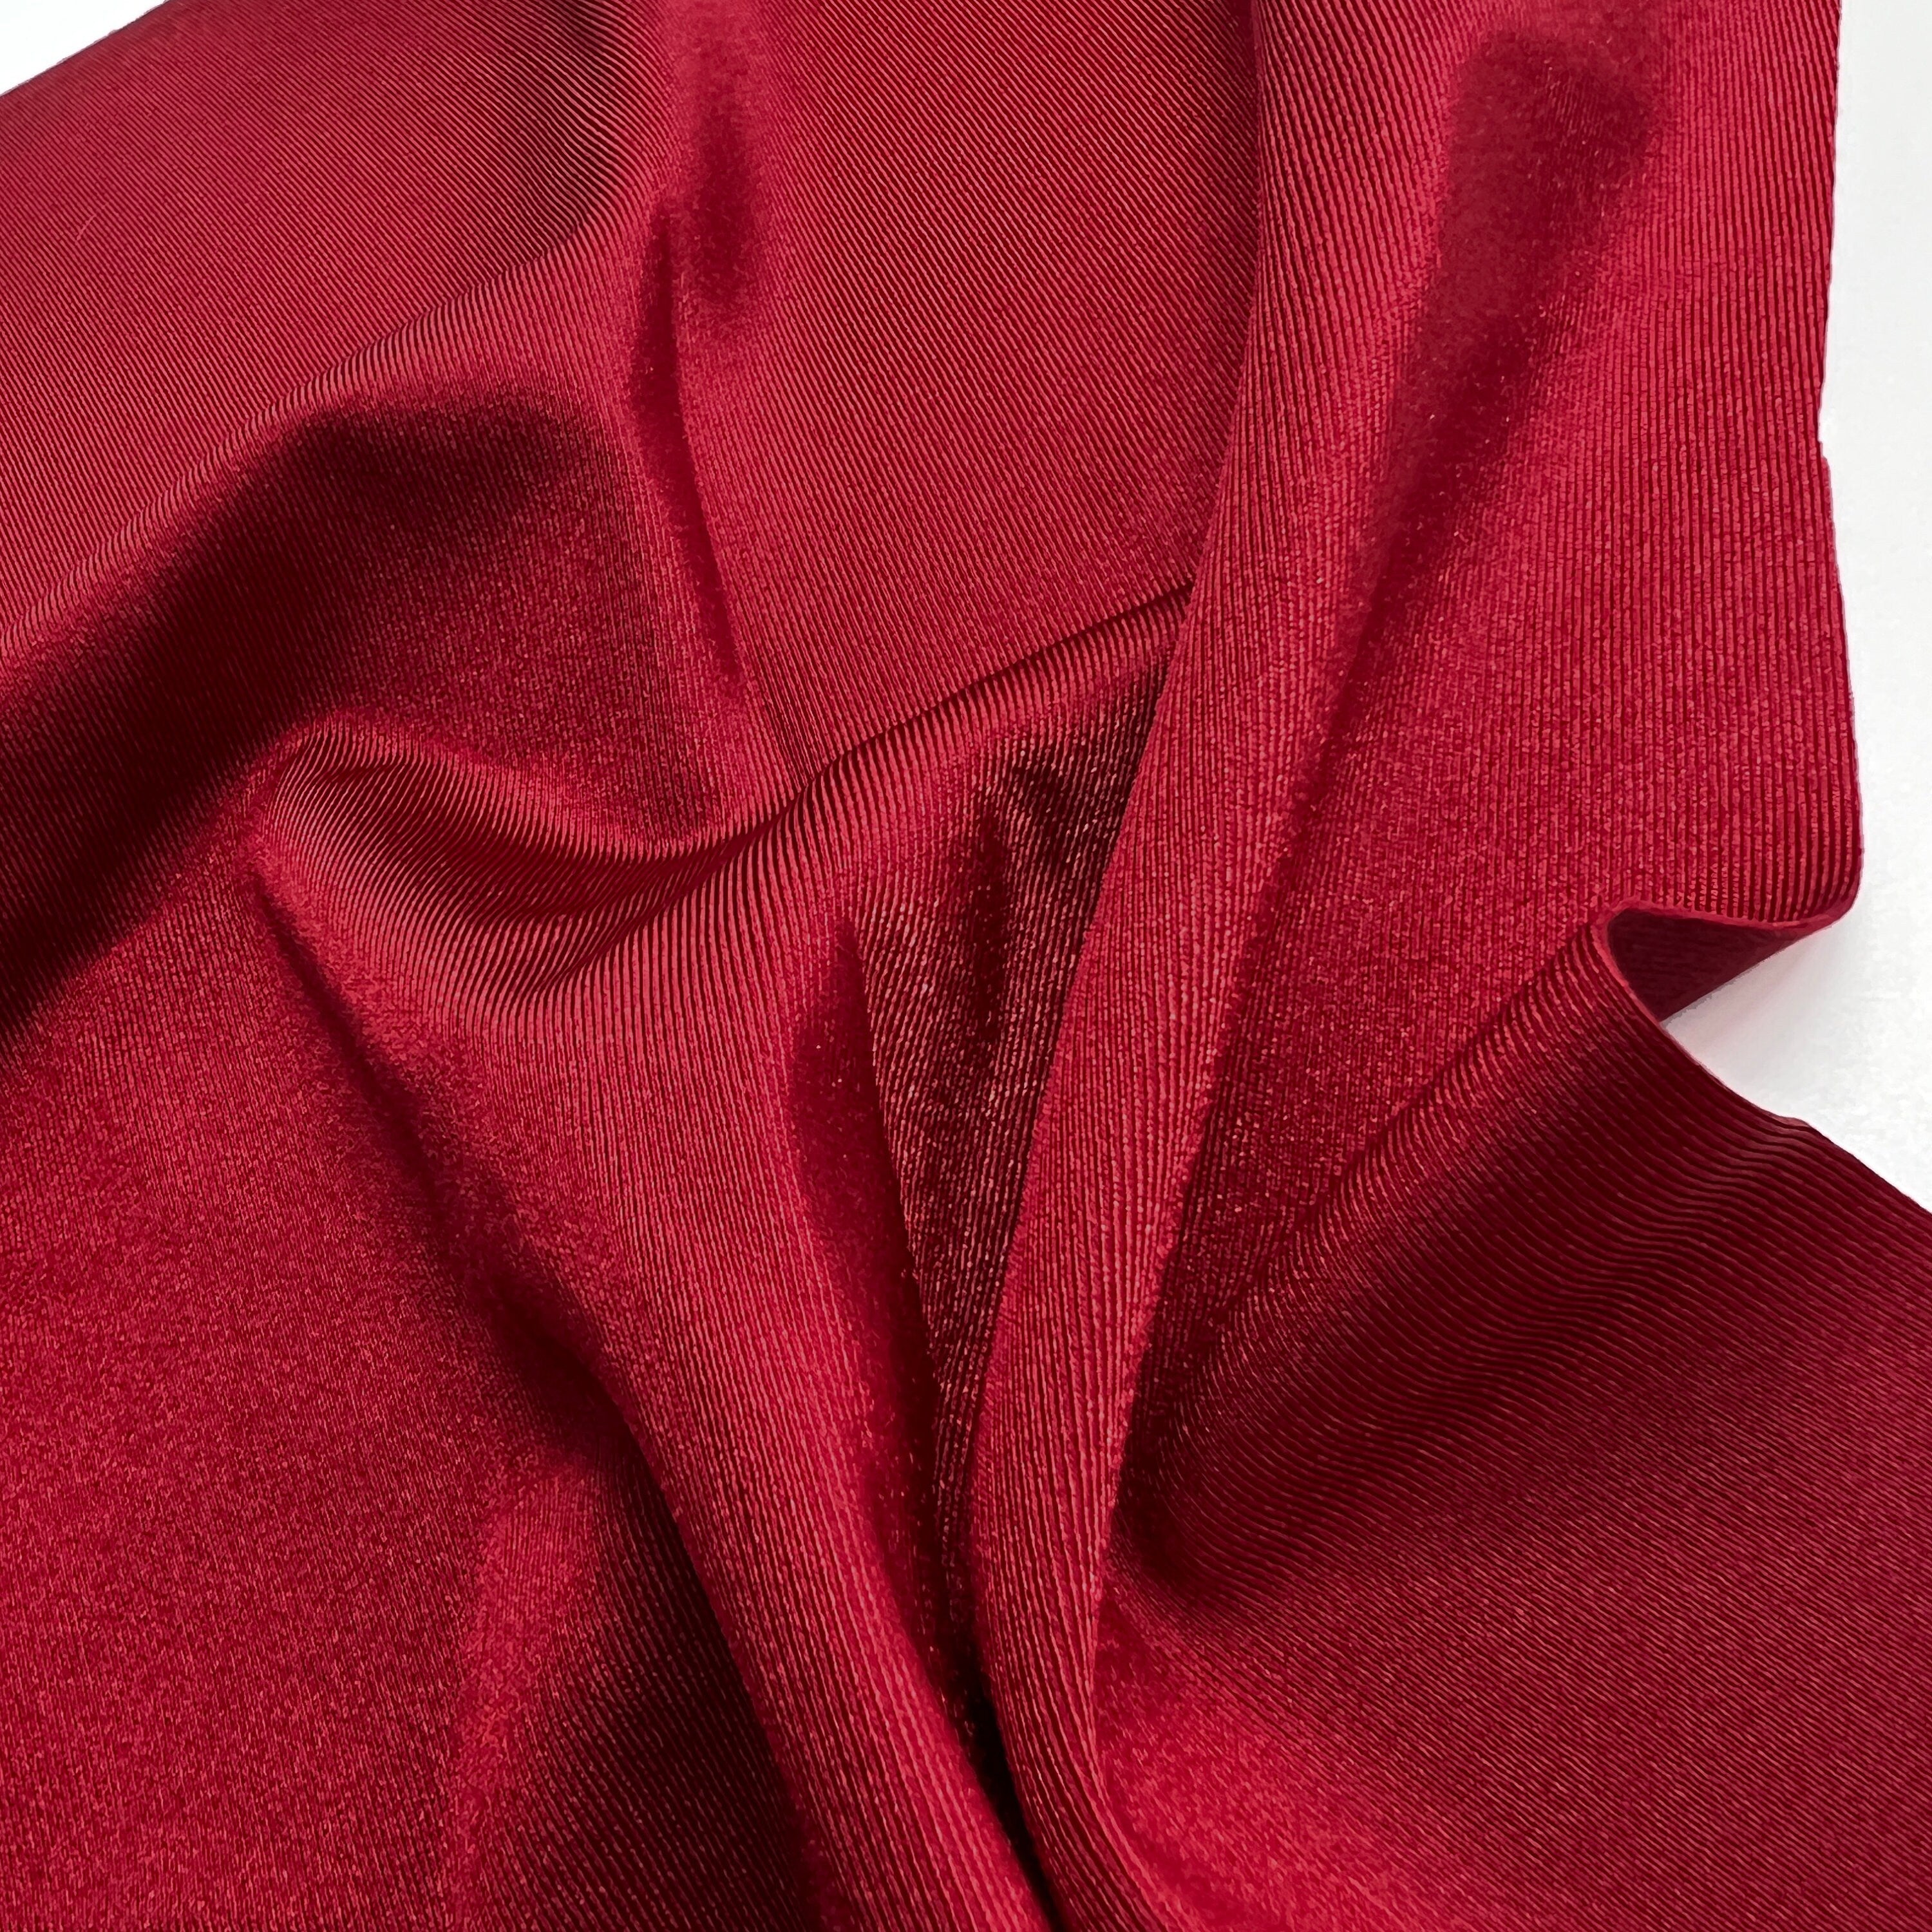 CLEARANCE- Shiny Heavyweight Stretch Tricot Fabric, Burgundy Red- 1.5 yard piece